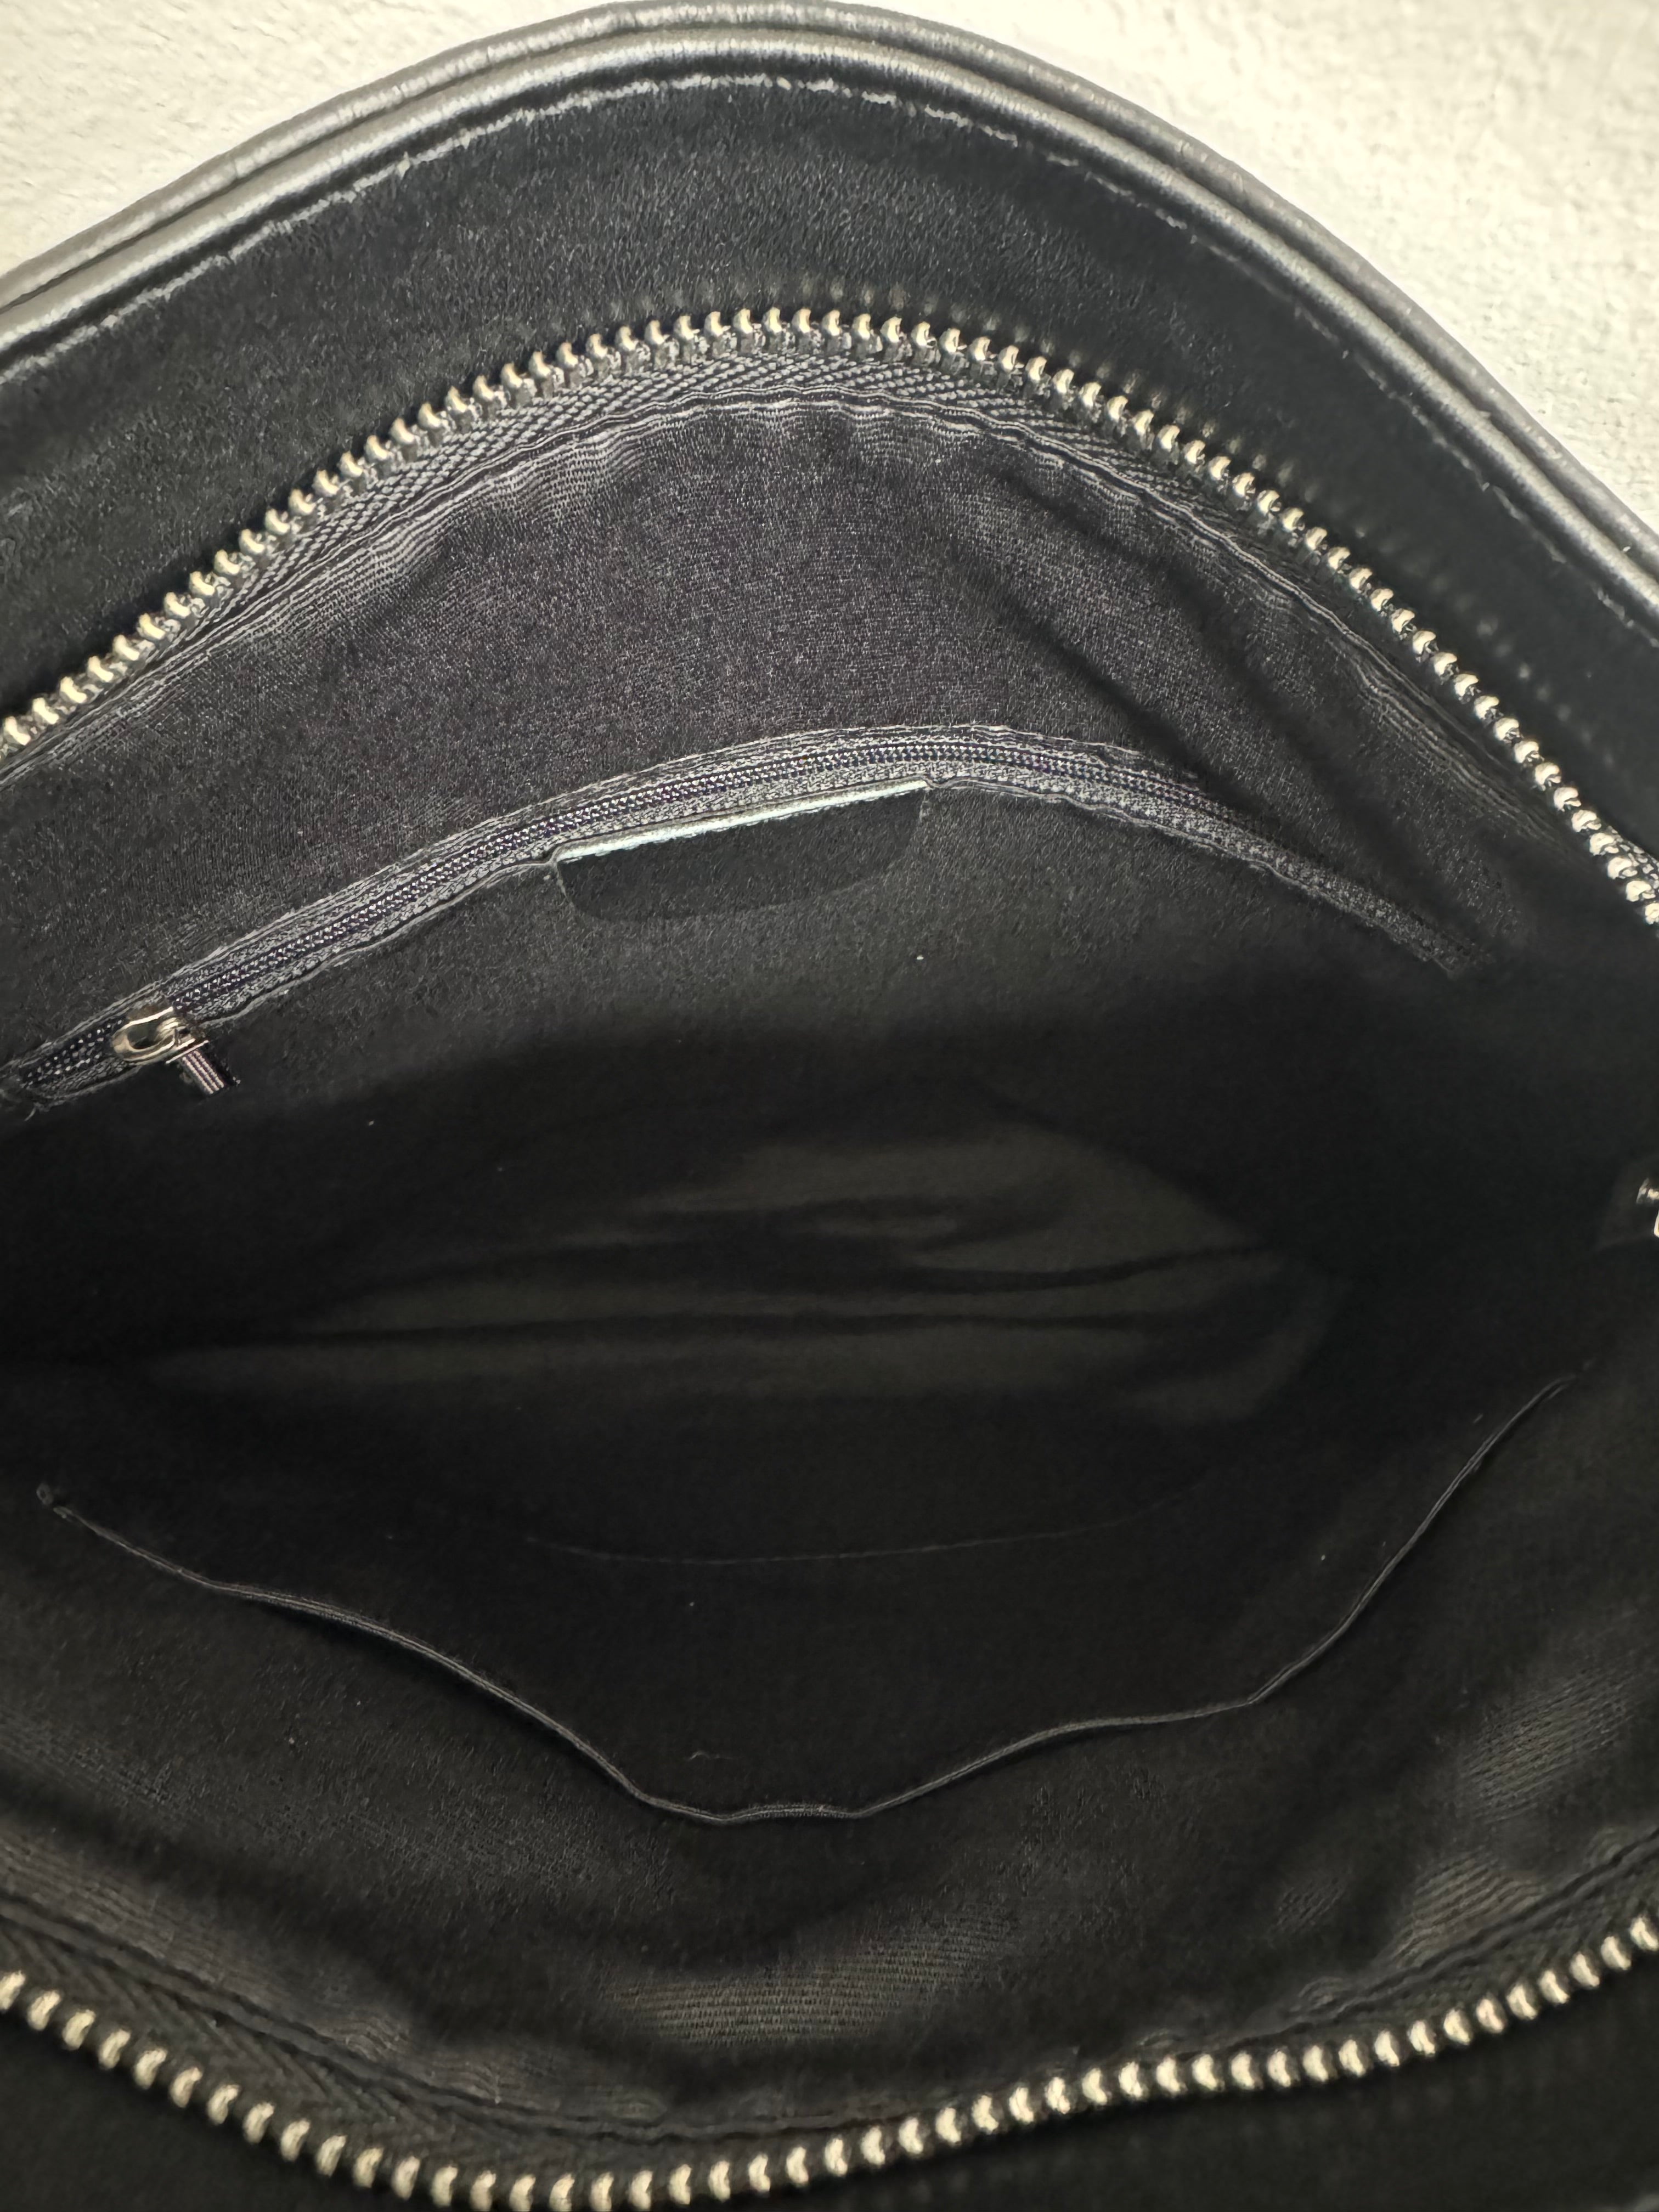 Black Satchel Handbag